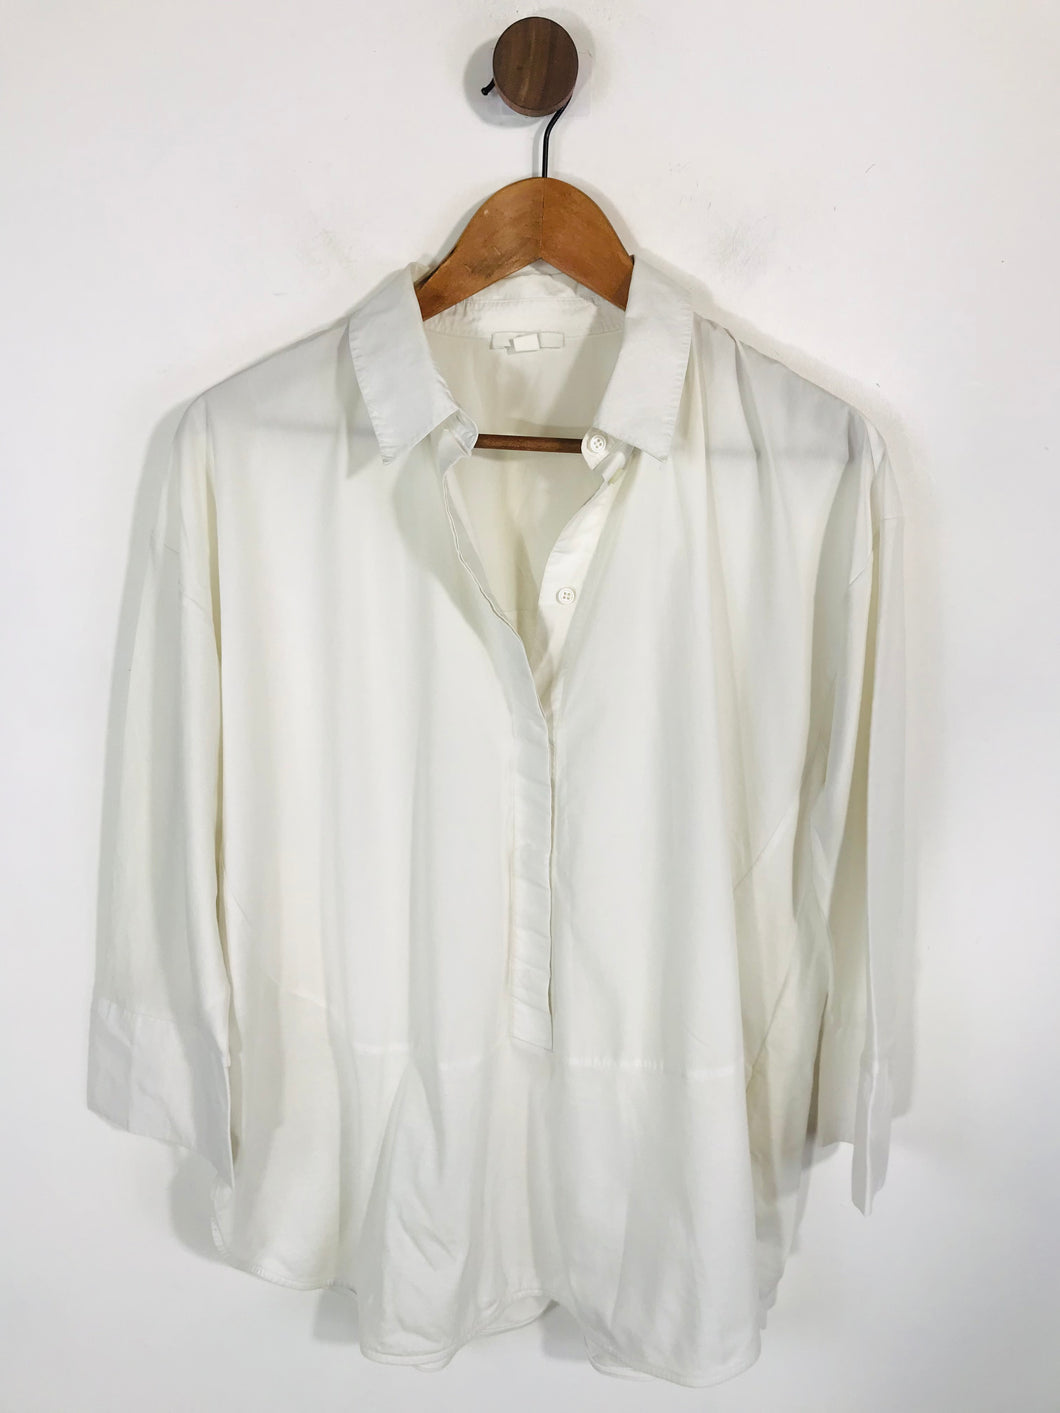 Cos Women's Cotton Long Sleeve Blouse | M UK10-12 | White